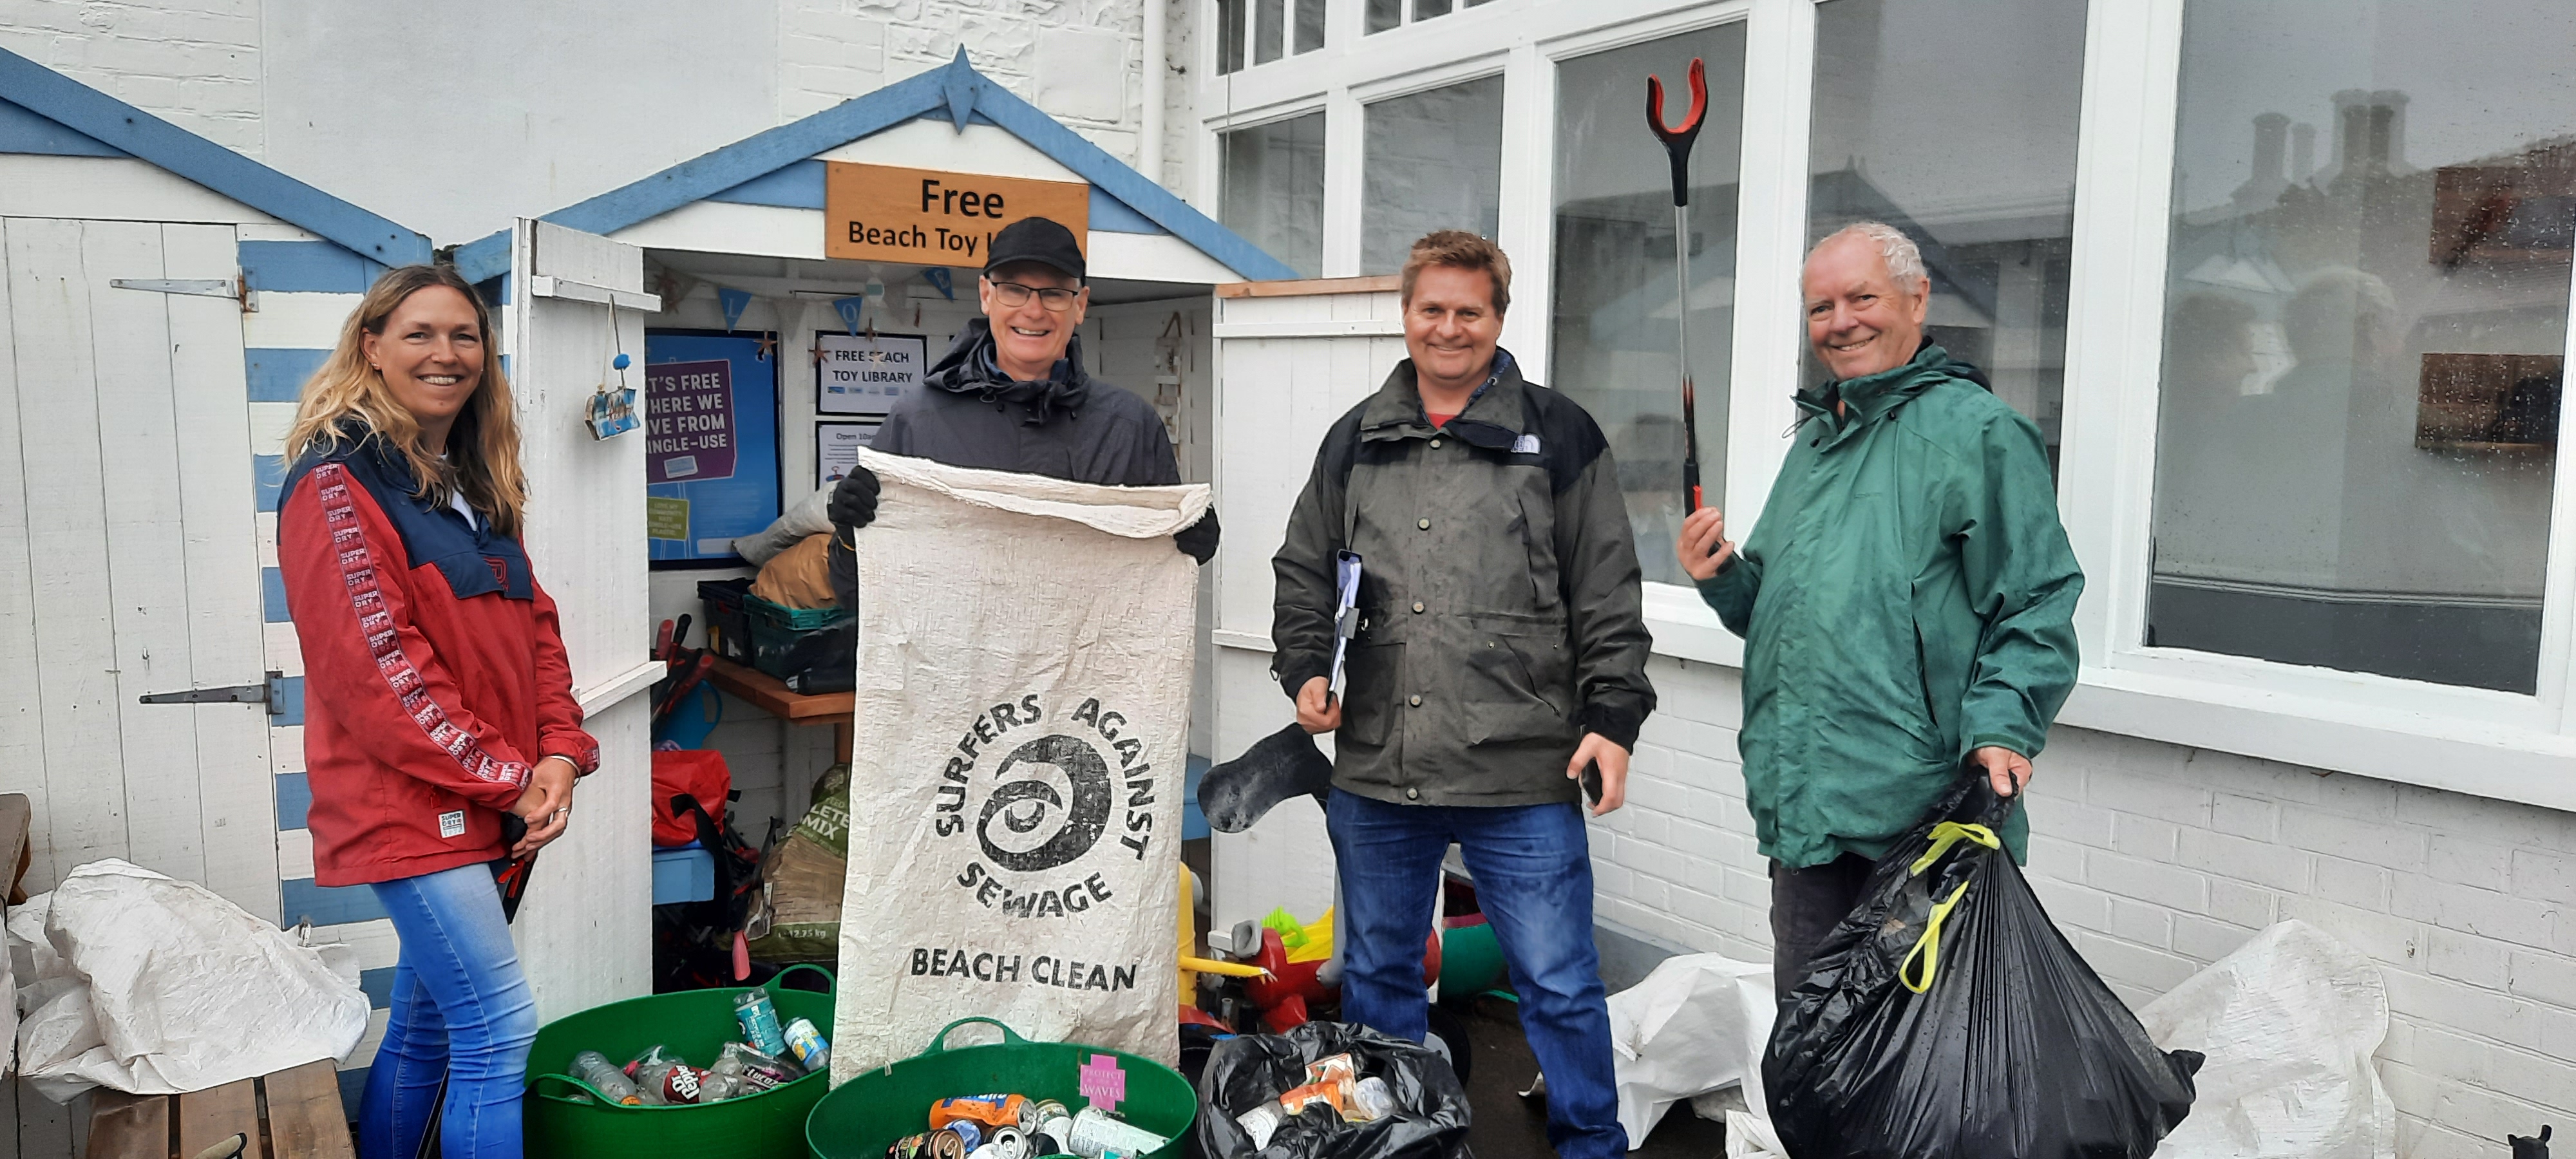 Plastic Free Communities volunteers help clean up beaches along